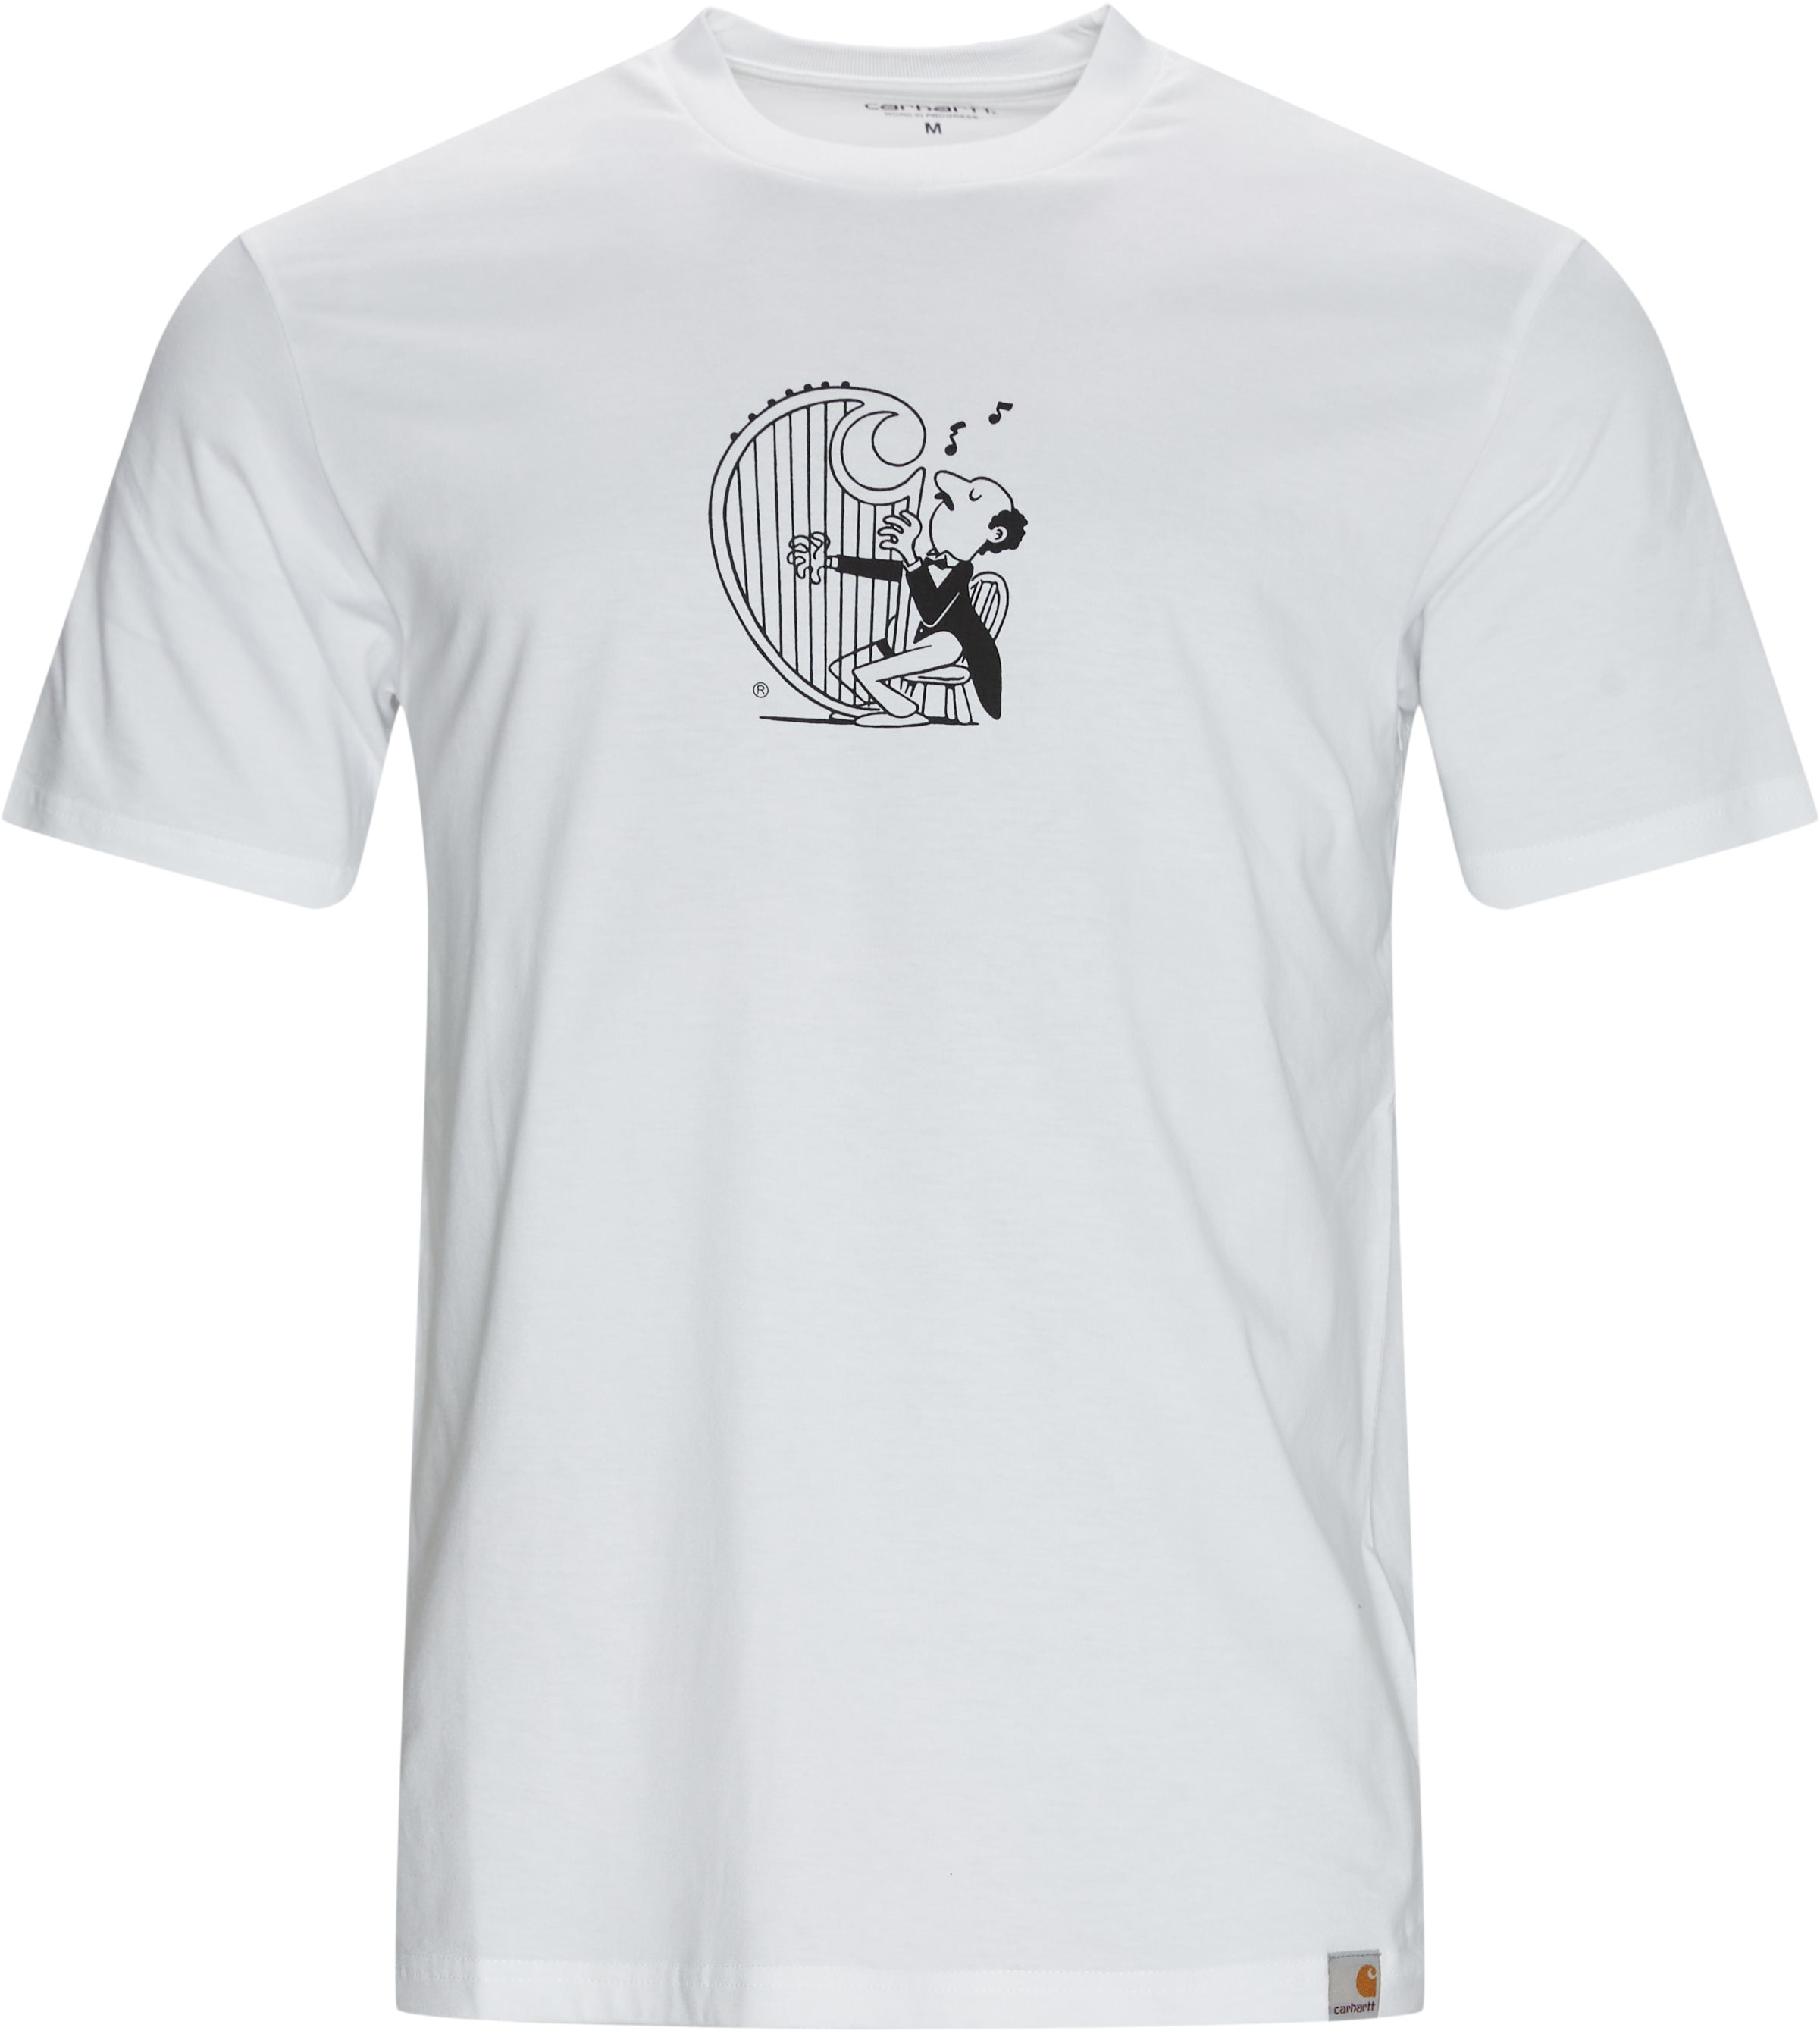 Harp Tee - T-shirts - Regular fit - White